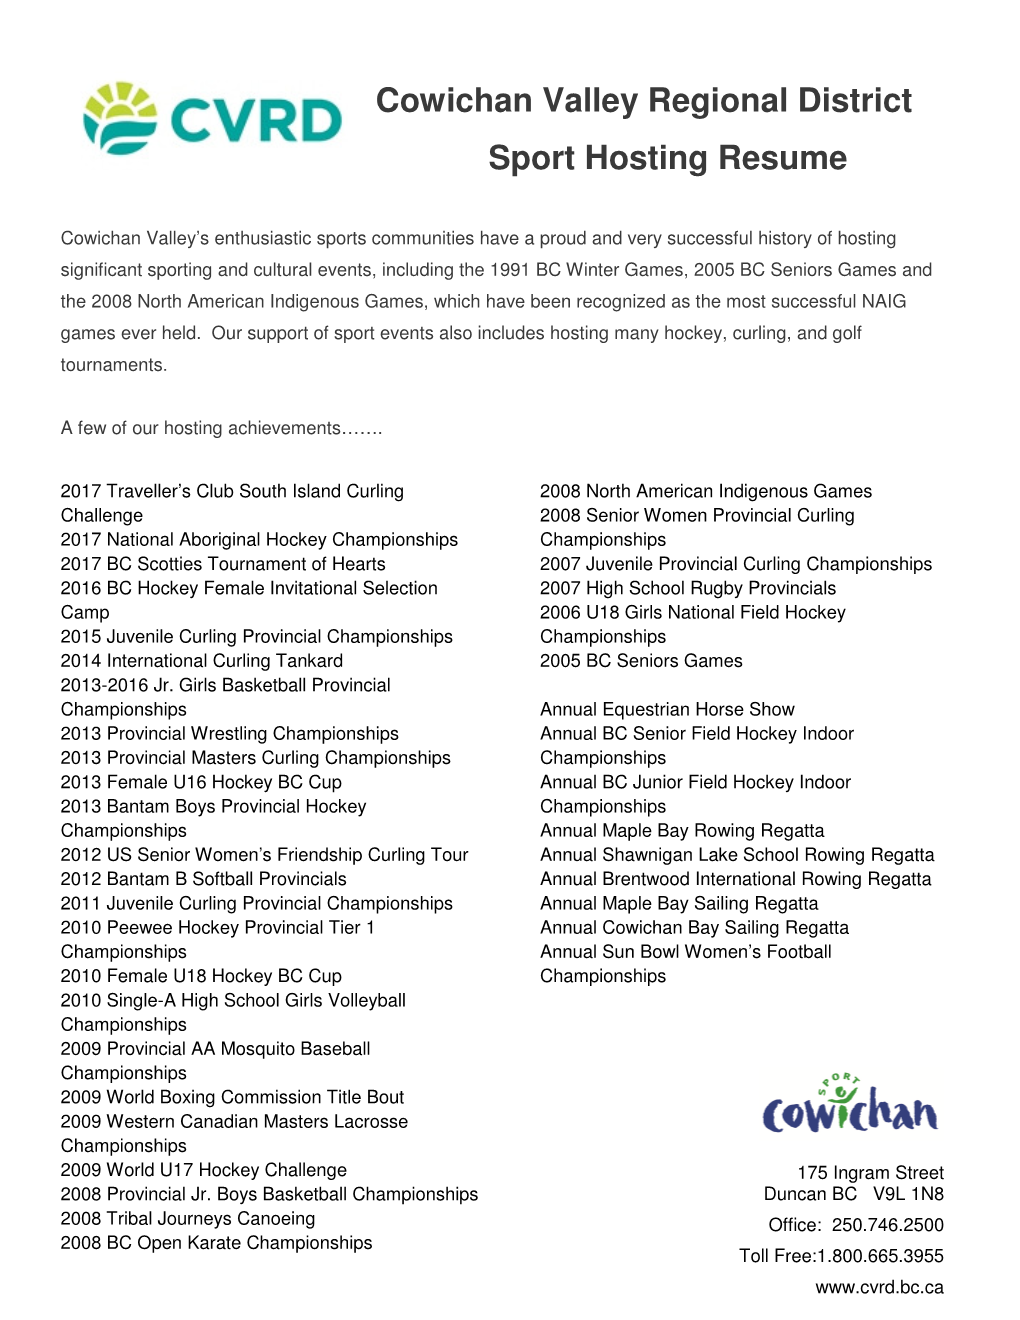 Cowichan Valley Regional District Sport Hosting Resume